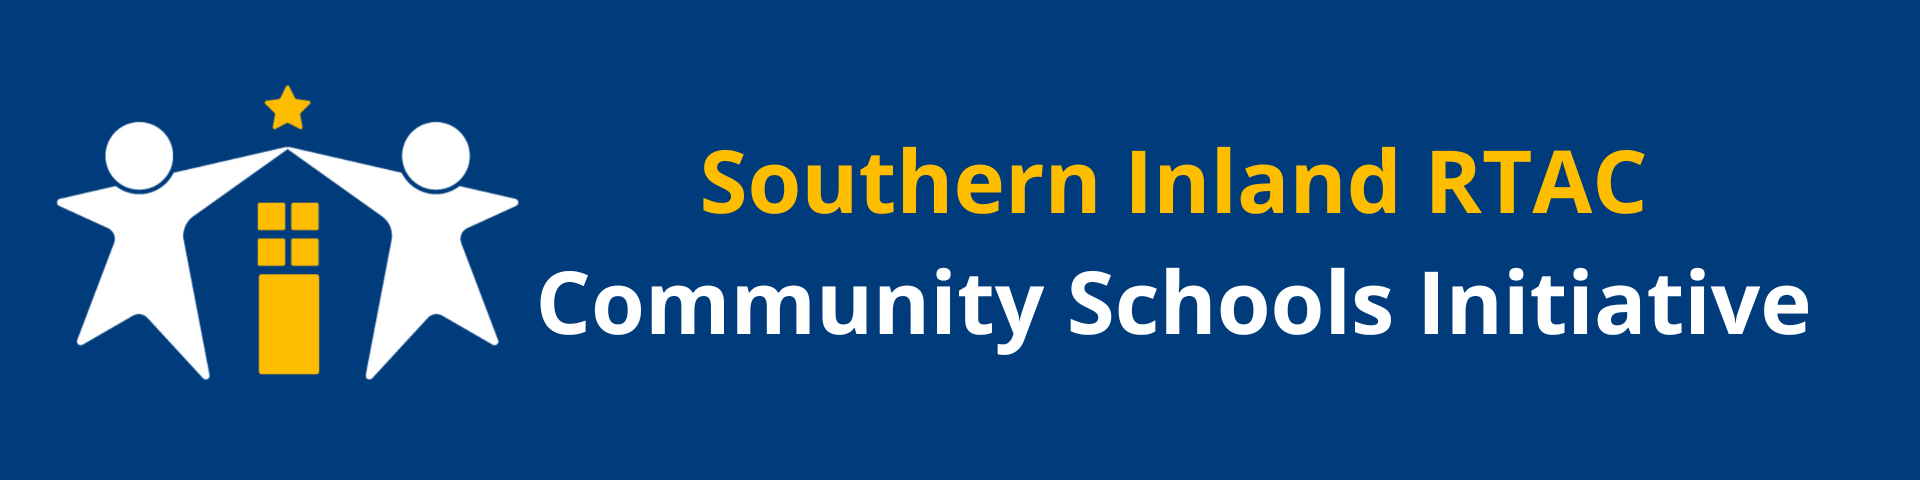 Southern Inland RTAC Community Schools Initiative Logo